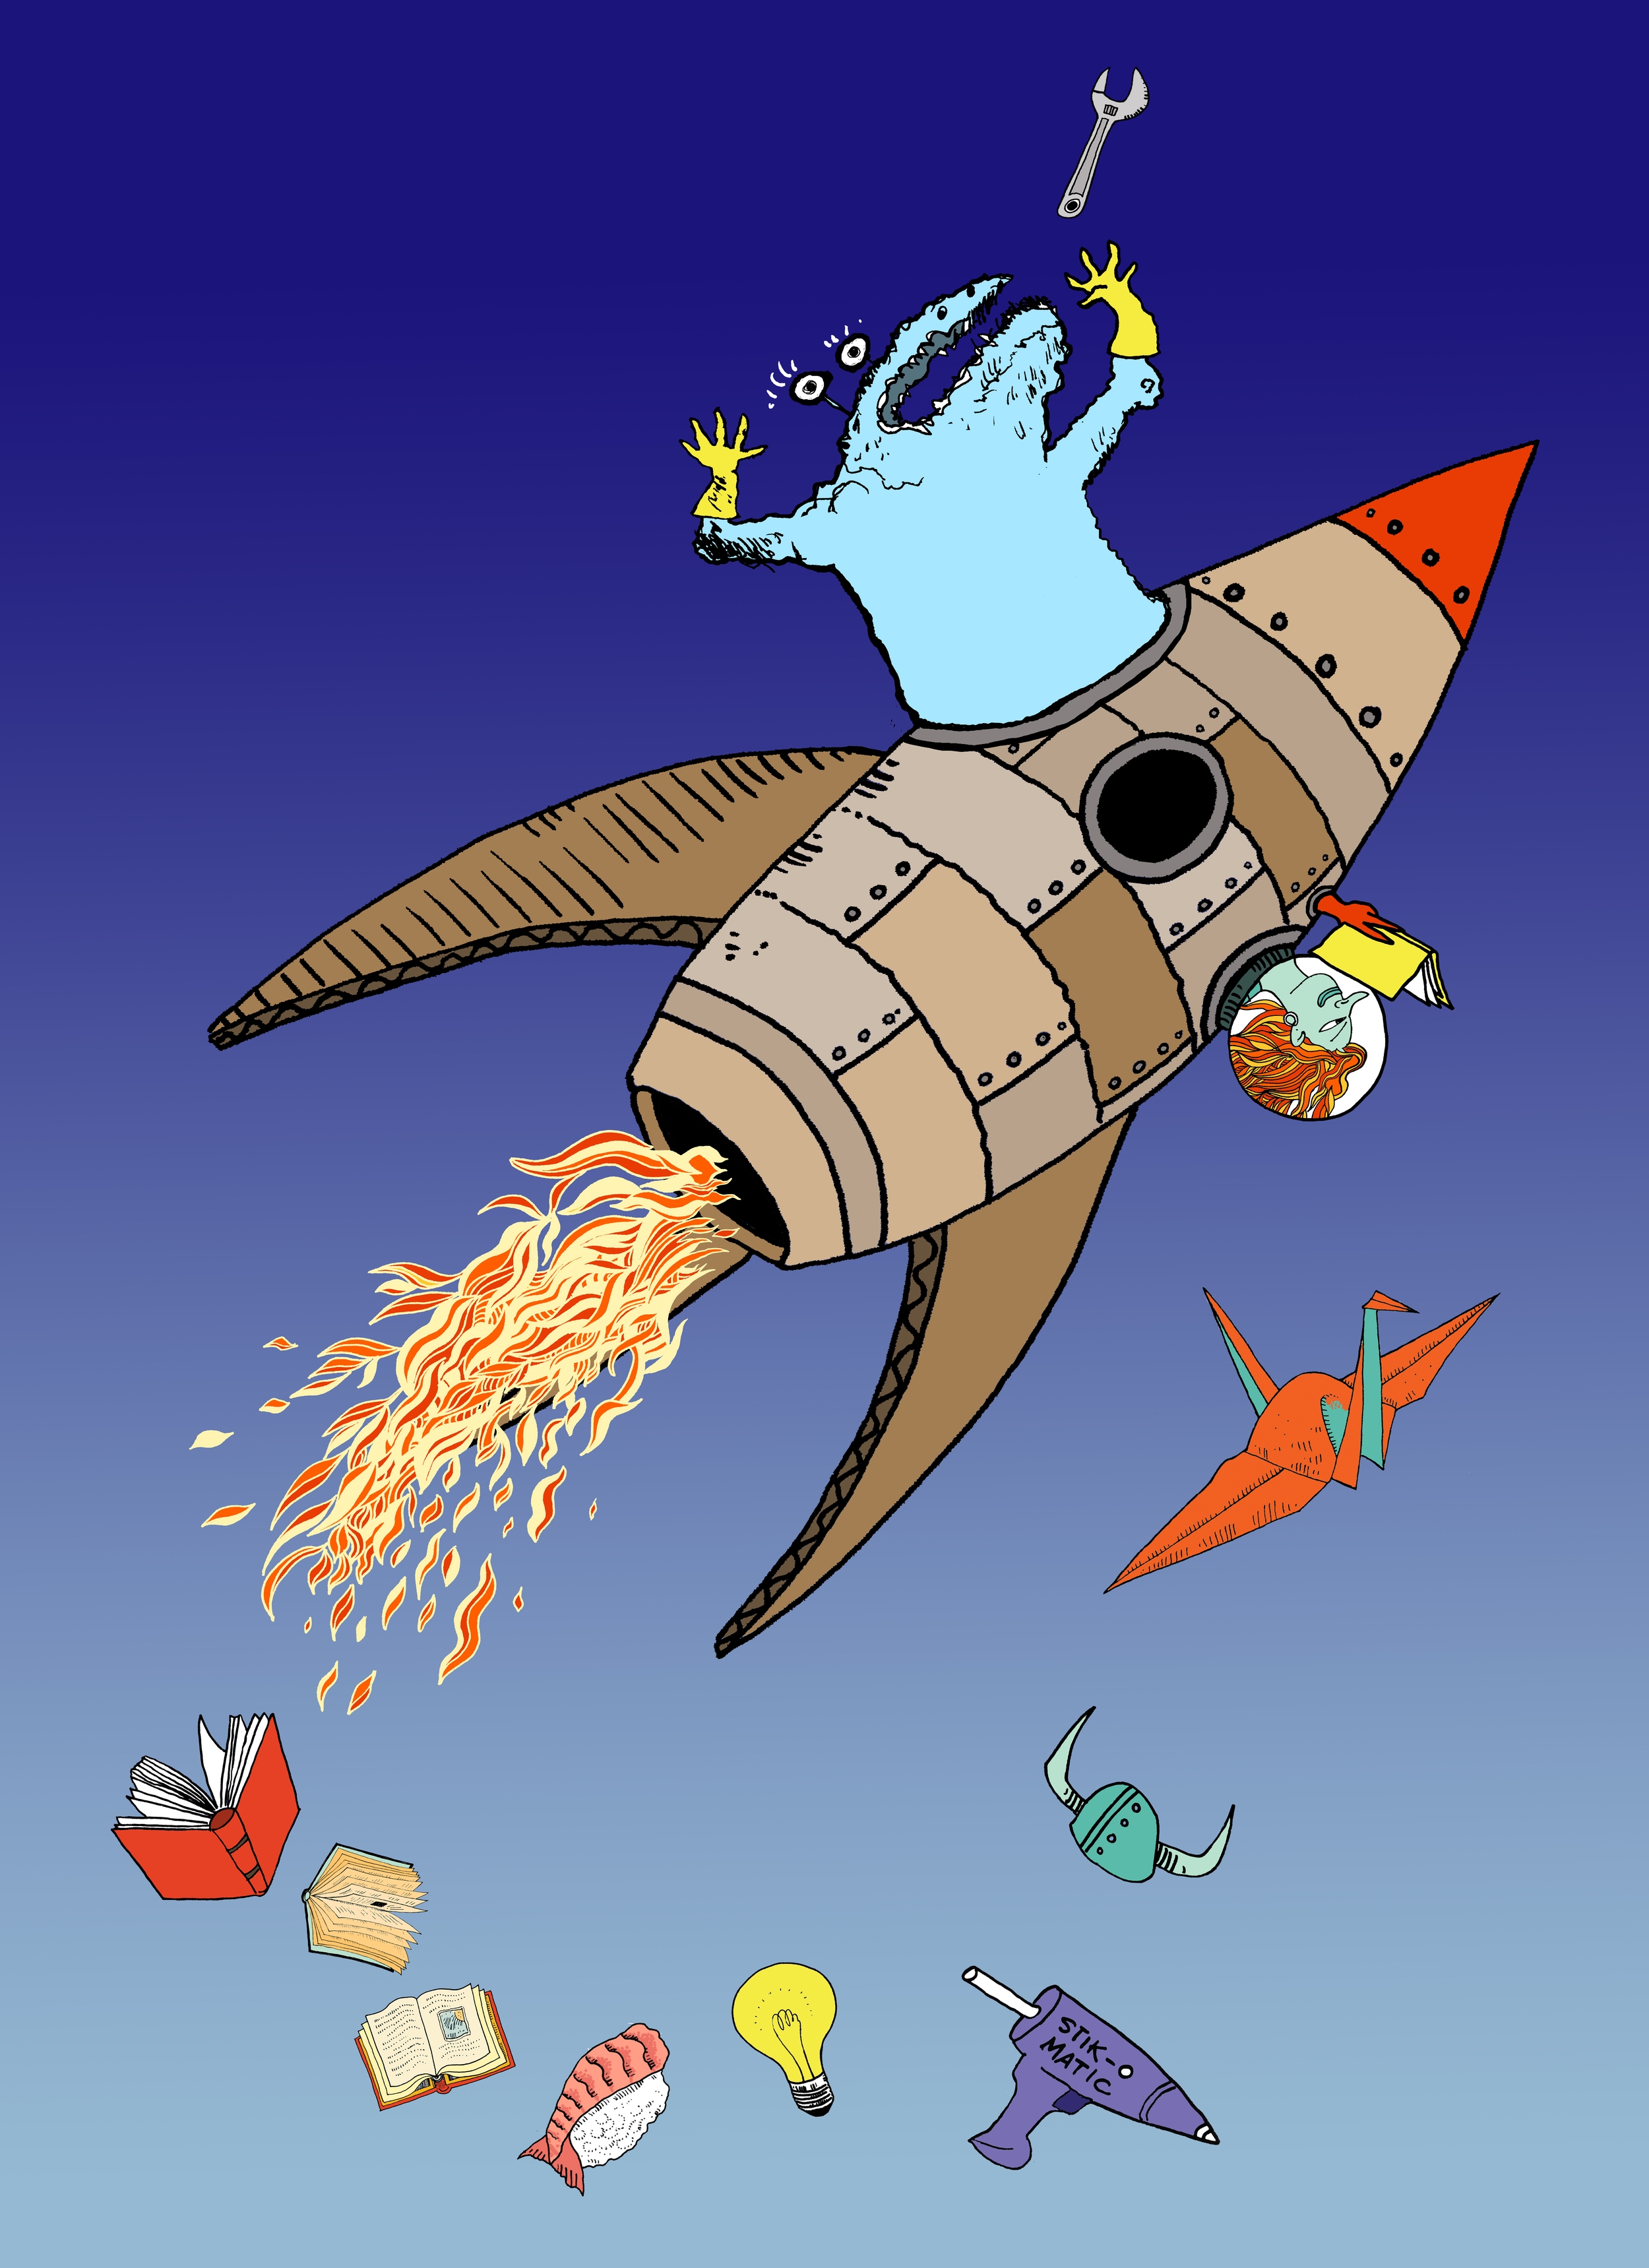 Blast Off! MegaMania! poster illustration, 2016